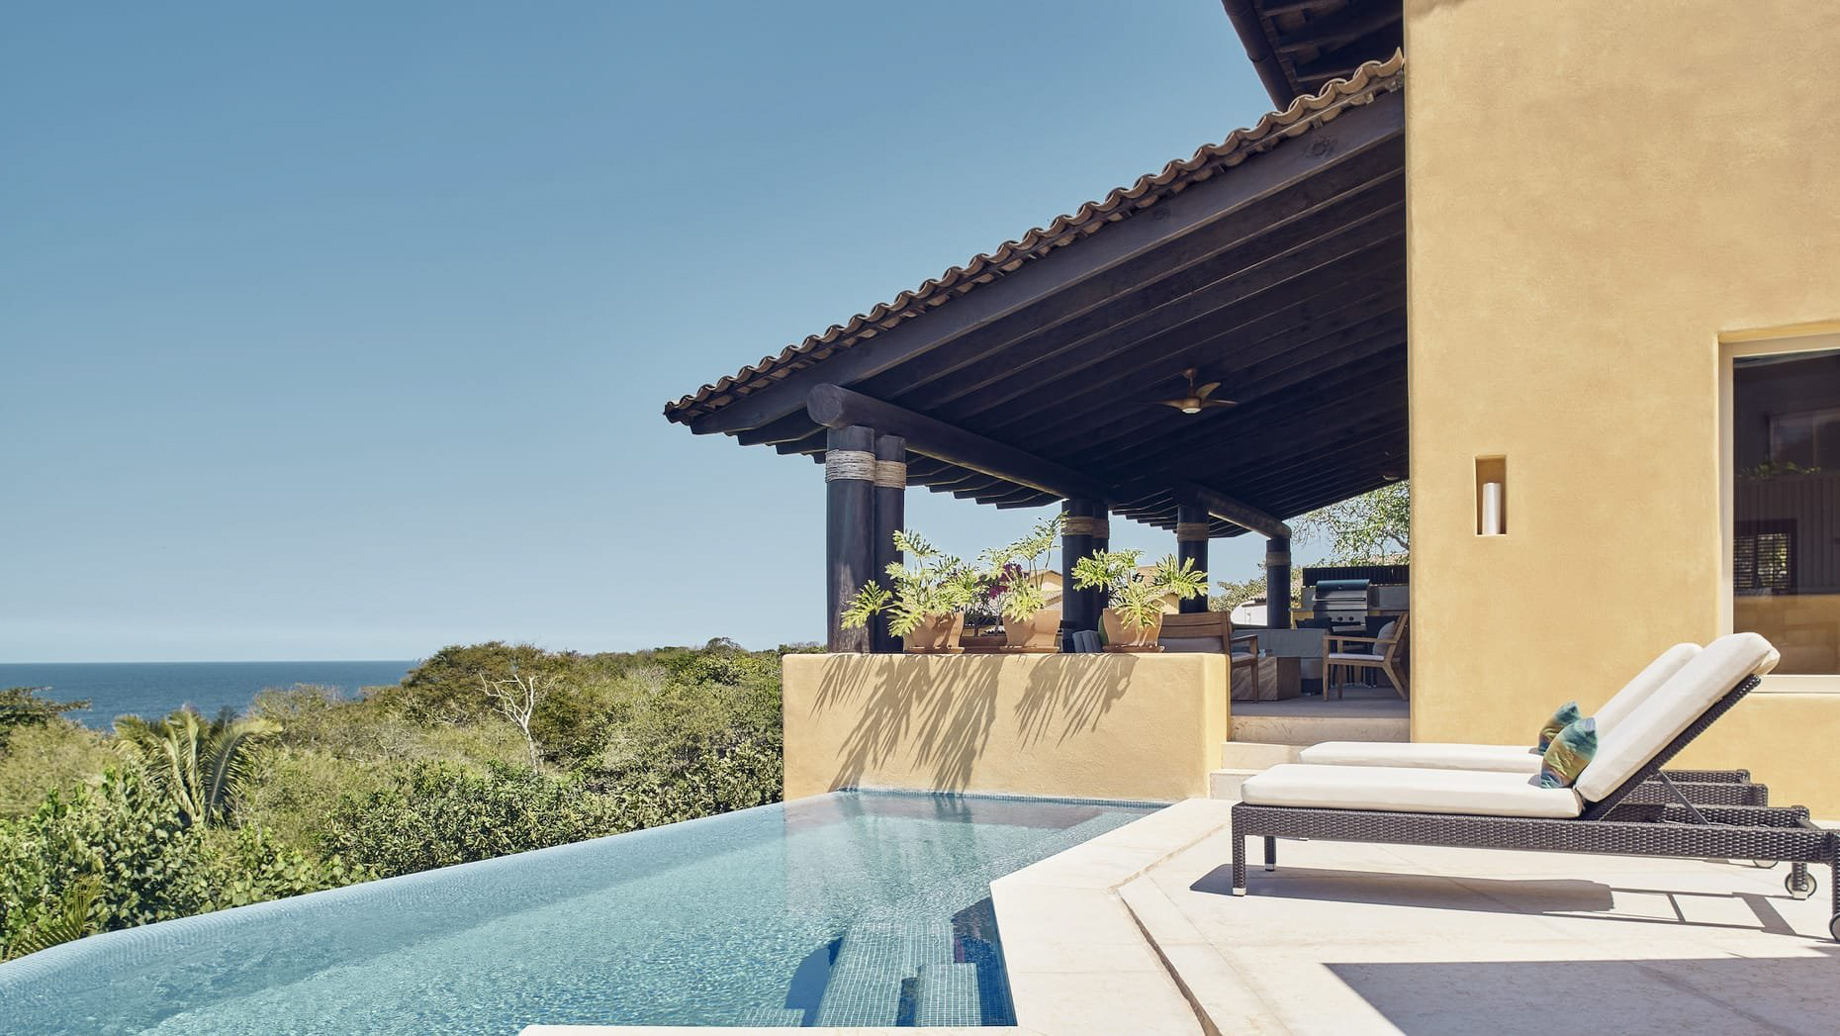 Four Seasons Resort Punta Mita – Nayarit, Mexico – Verano Ocean View Villa Pool Deck